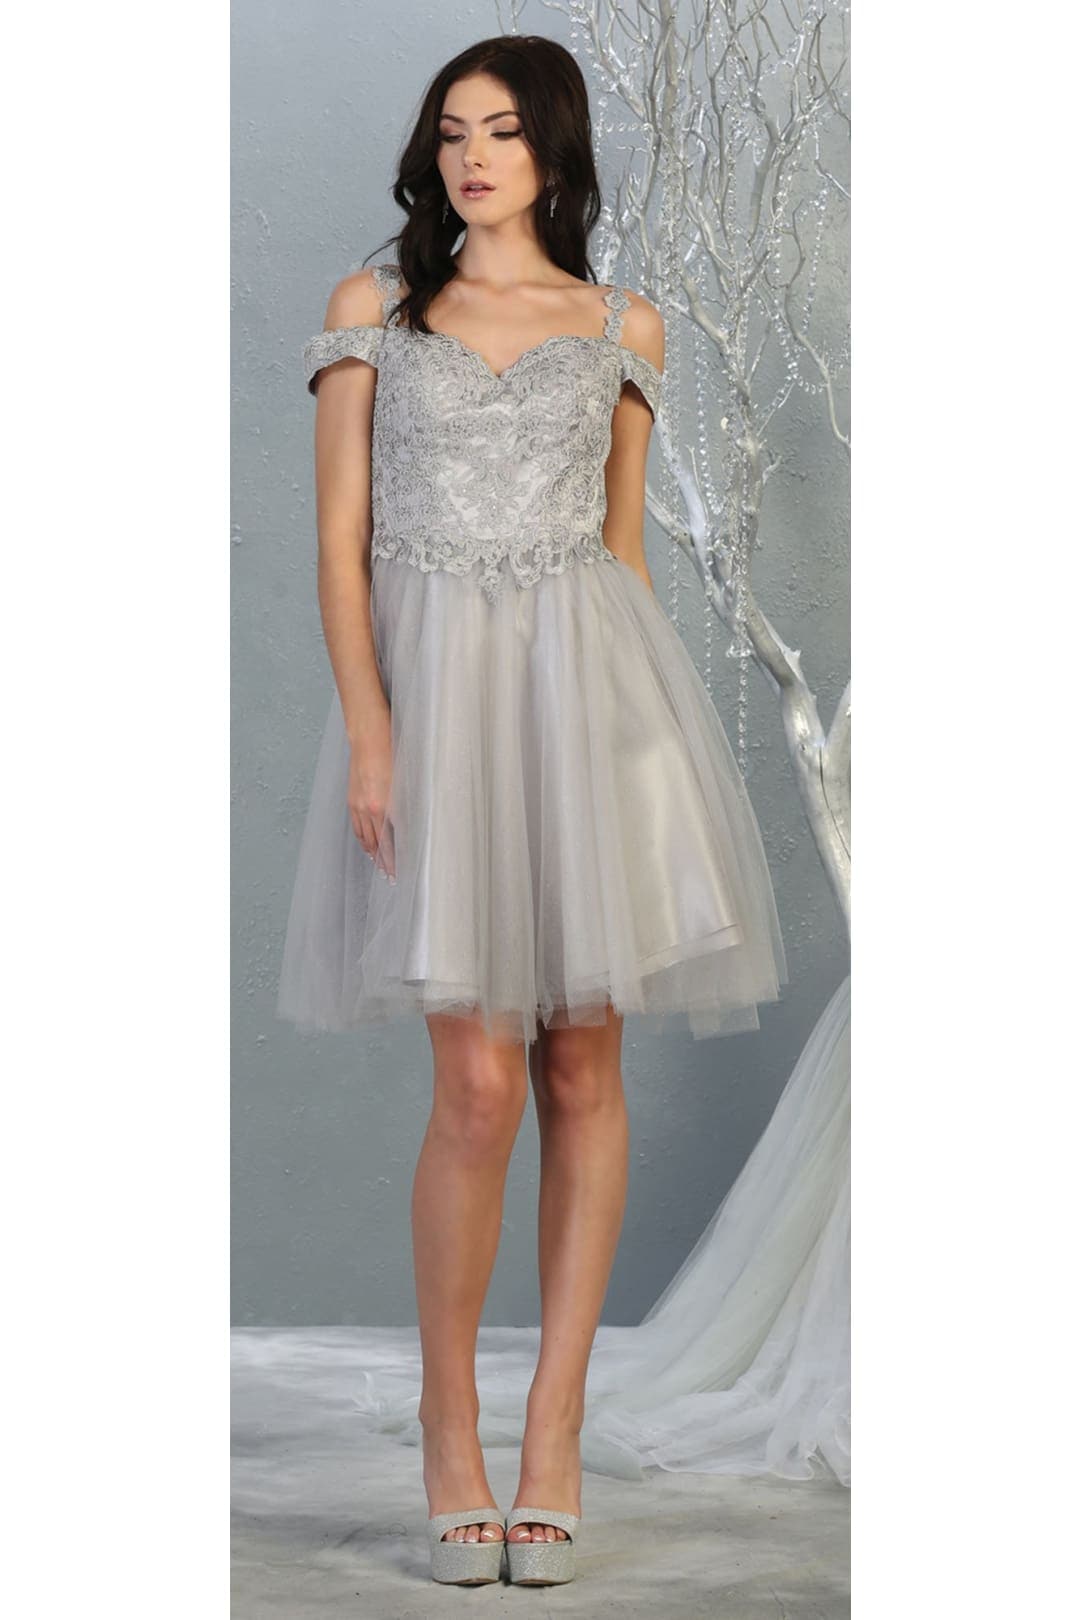 Classy Bridesmaids Dress - SILVER / 4